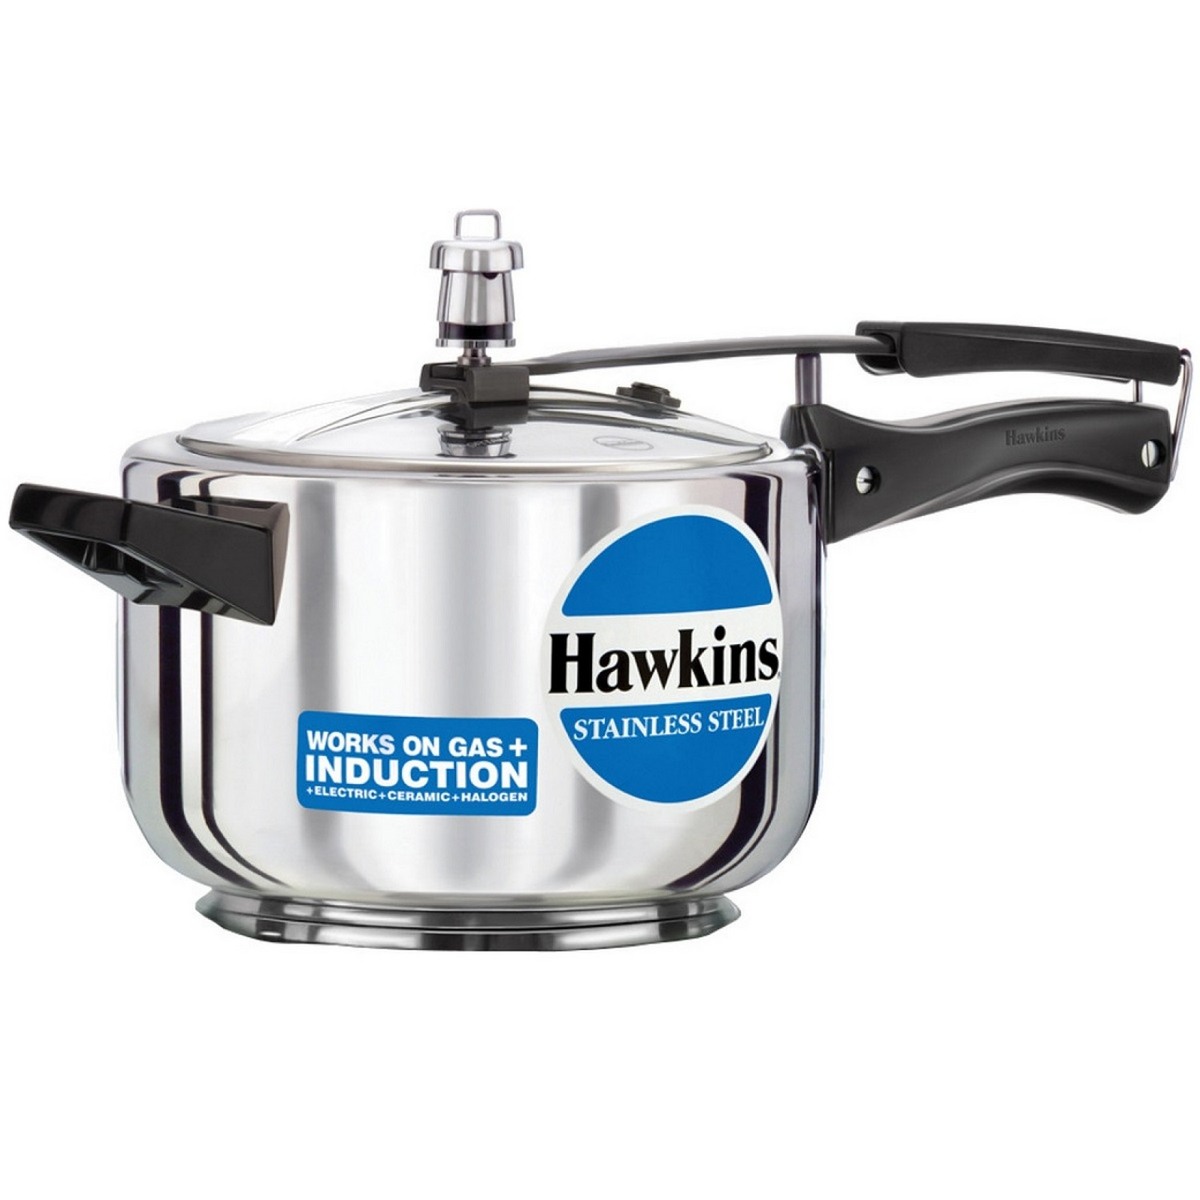 Hawkins Pressure Cooker Stainless Steel HSS40 4 Ltr